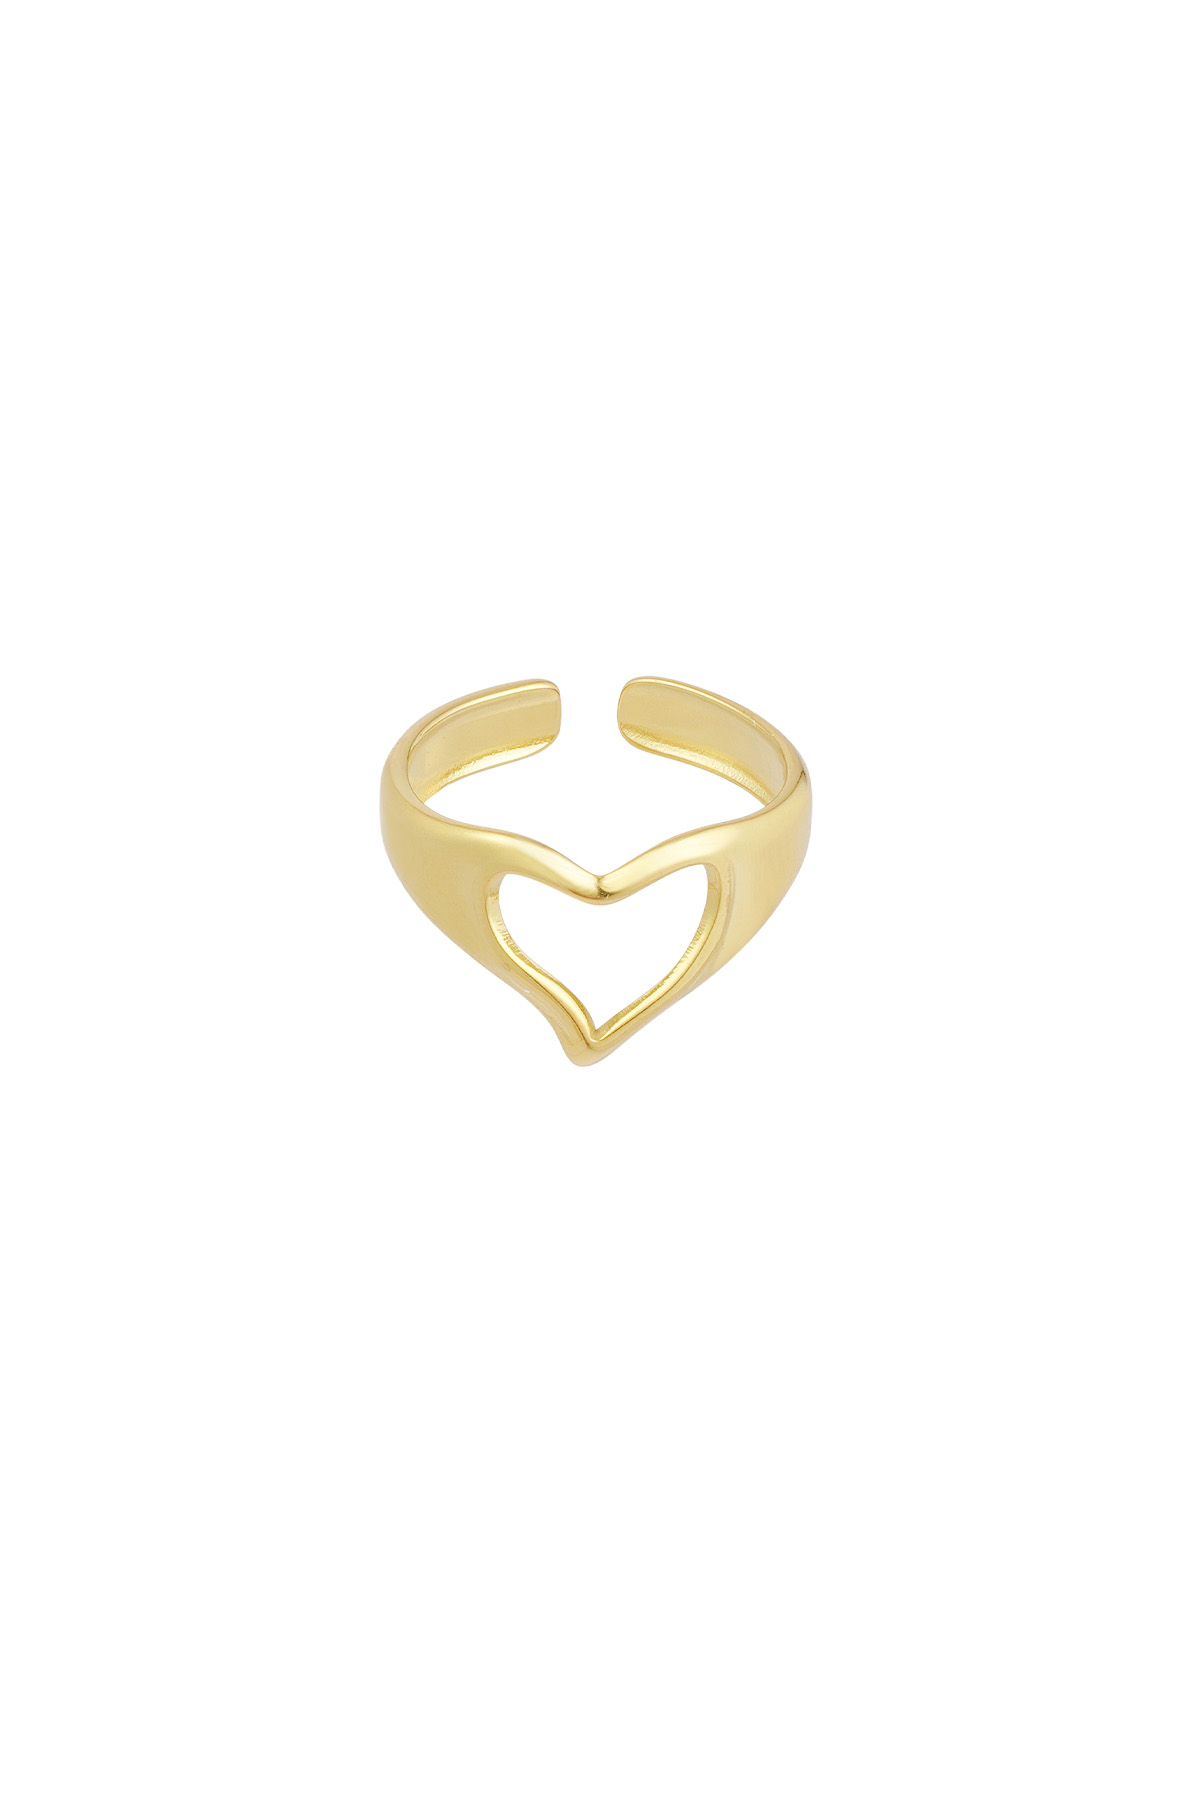 Ring love hands - goud h5 